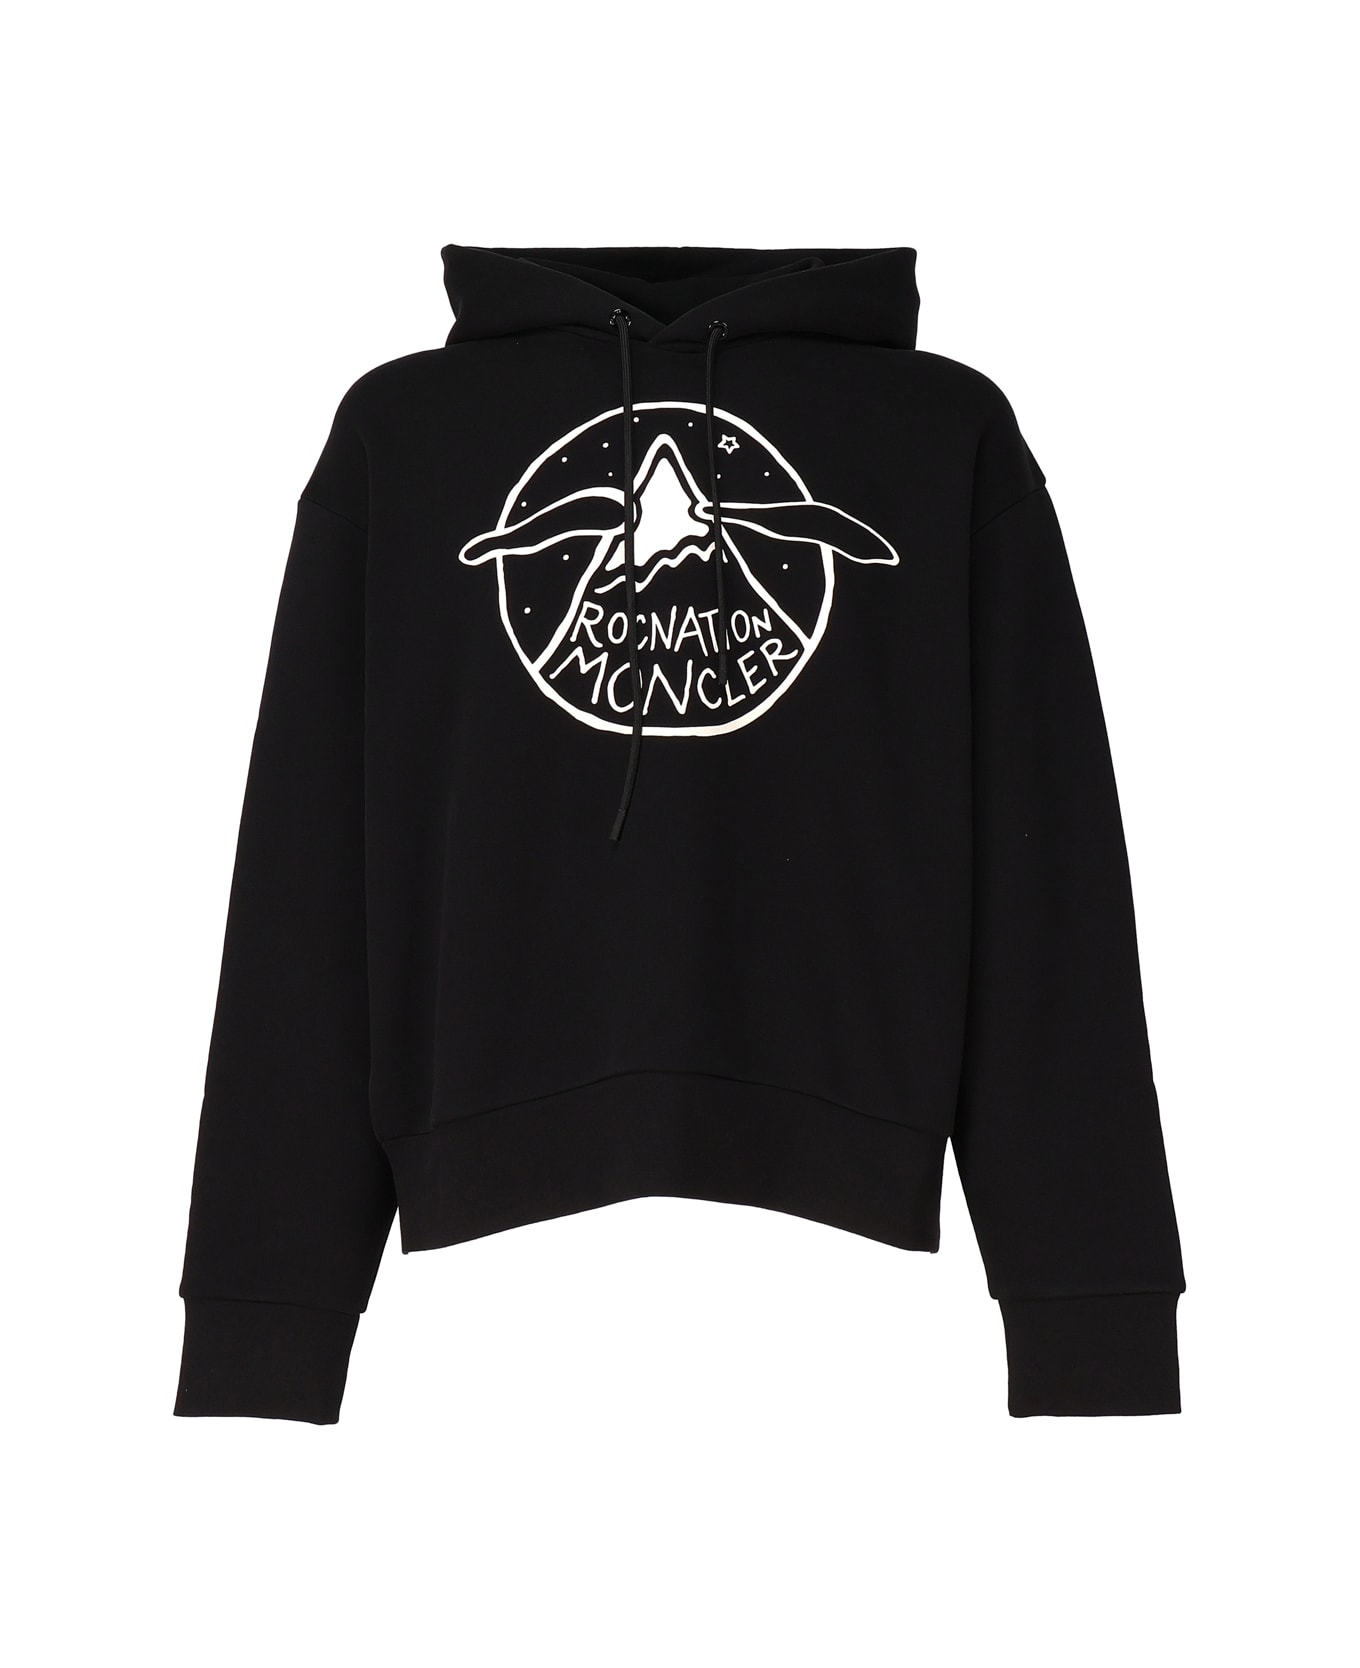 Moncler Genius Logoed Hooded And Zippered Sweatshirt - Black フリース